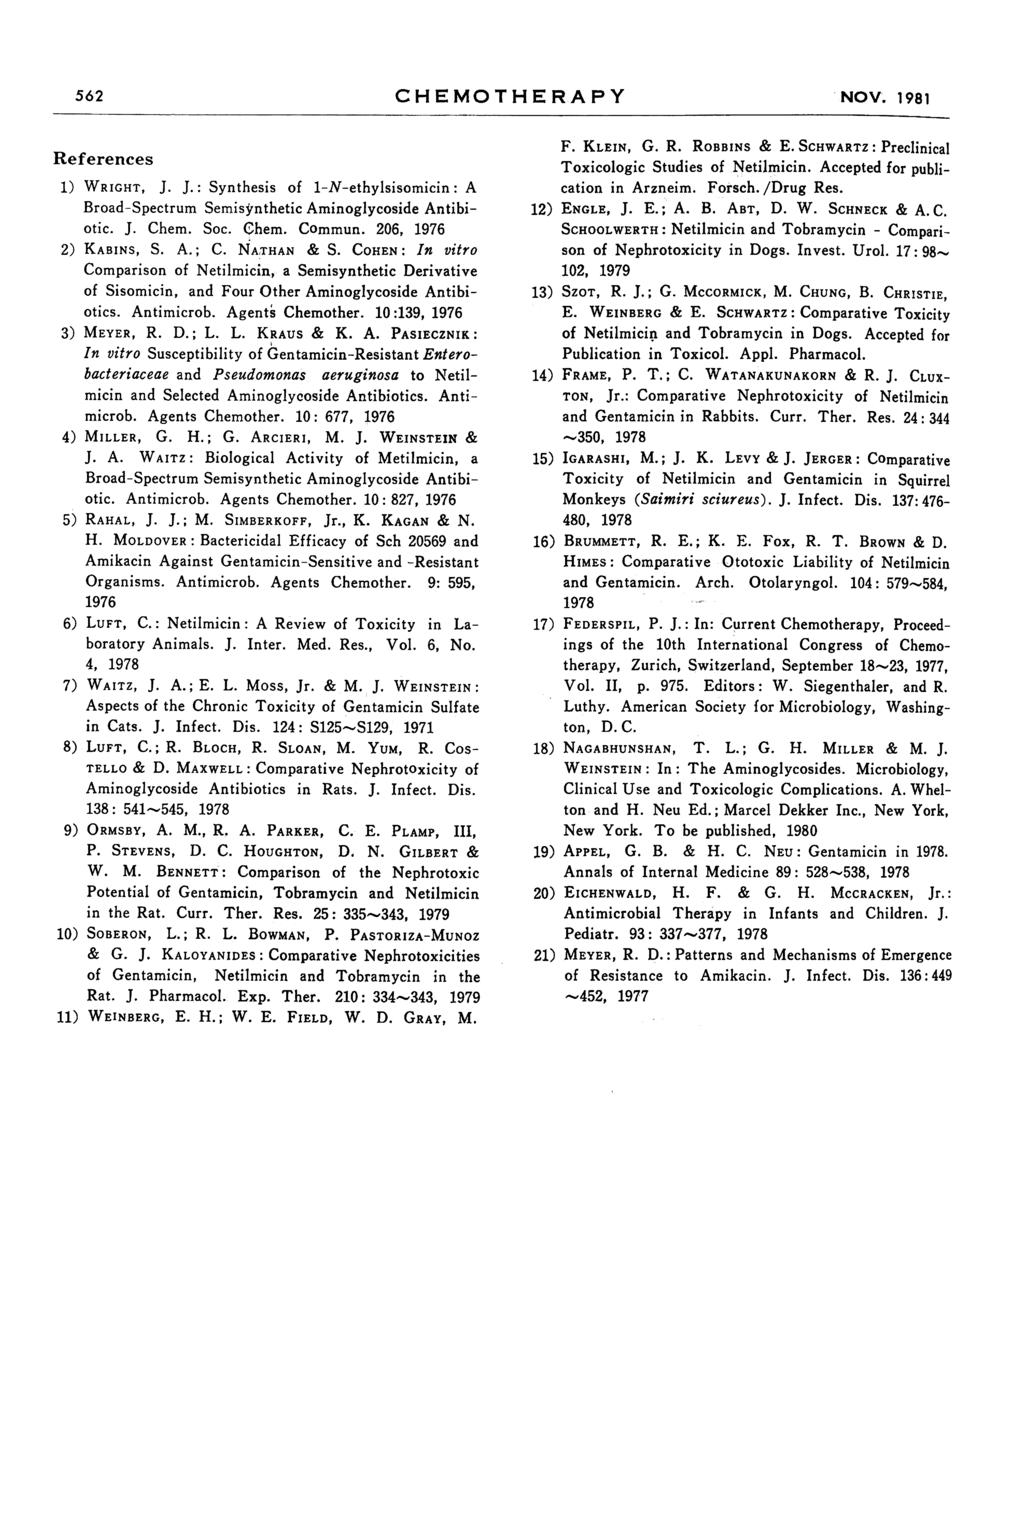 CHEMOTHERAPY NOV. 1981 References 1) WRIGHT, J. J.: Synthesis of 1-N-ethylsisomicin : A Broad-Spectrum Semisjrnthetic Aminoglycoside Antibiotic. J. Chem. Soc. Chem. Commun. 206, 1976 2) KABINS, S. A. ; C.